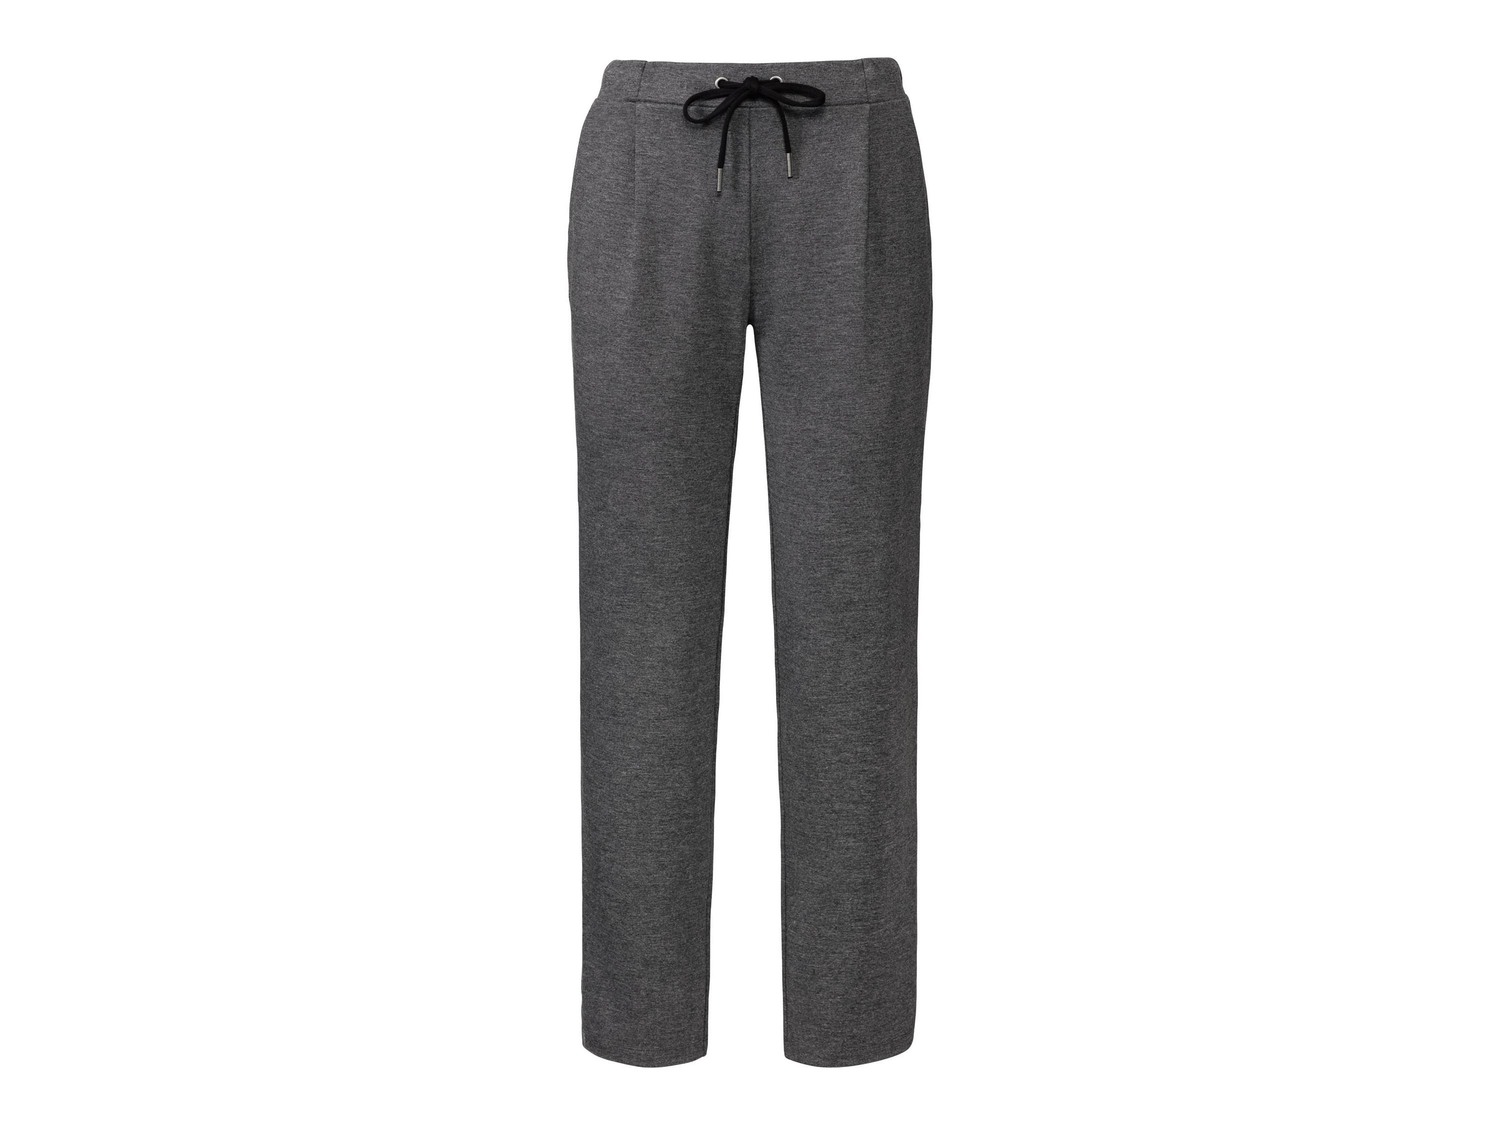 Pantaloni da donna Esmara, prezzo 9.99 &#8364;  
Misure: S-L
- Oeko tex NEW